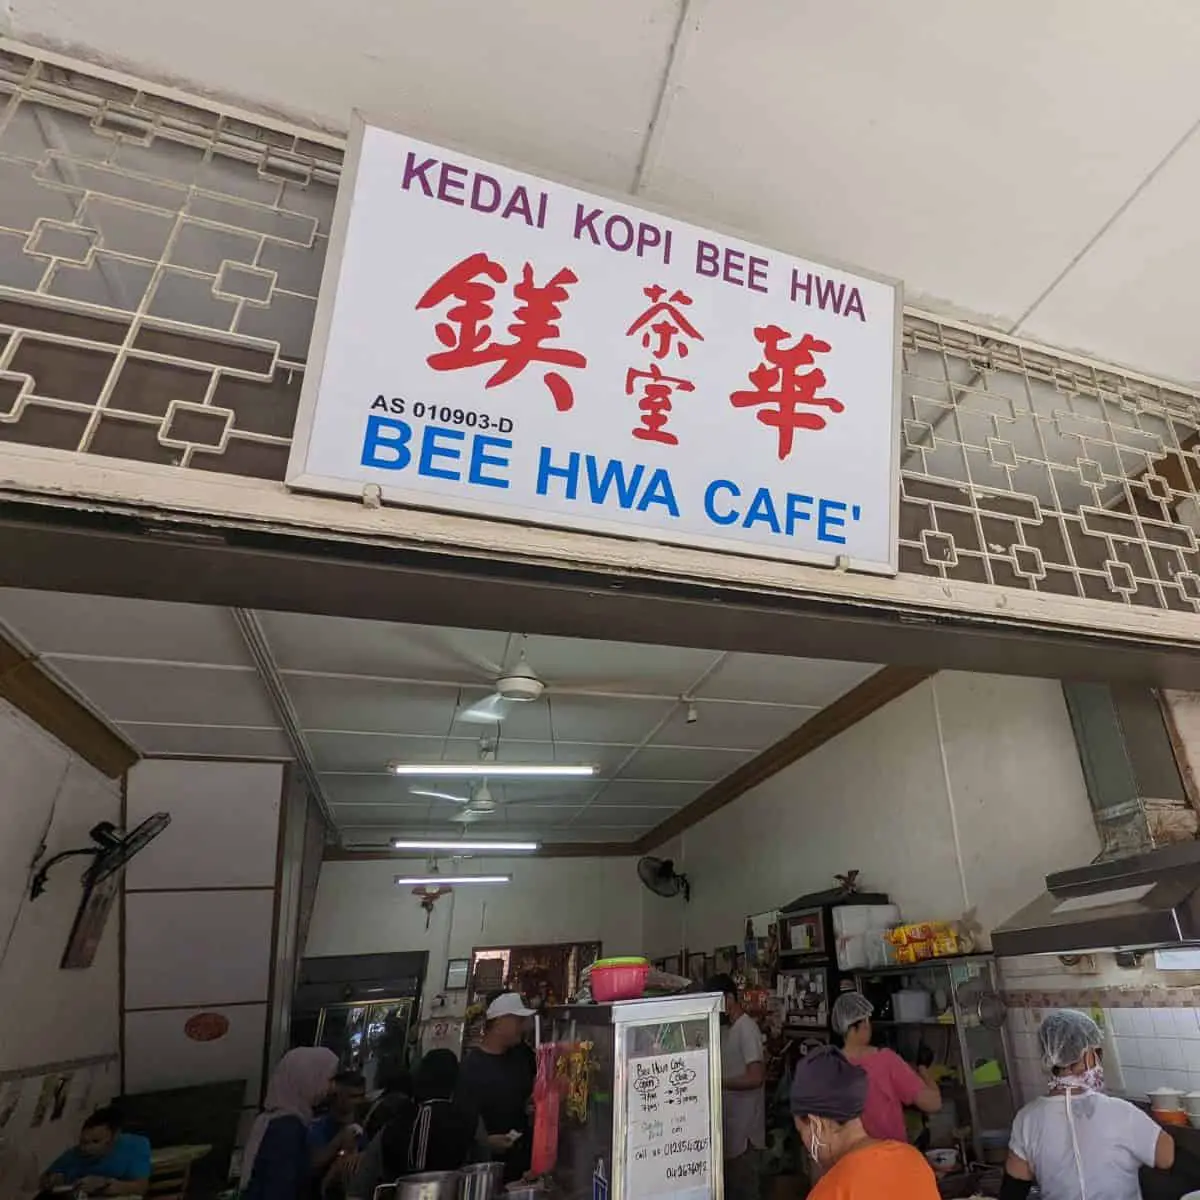 Kedai Kopi Bee Hwa front halal kopitiam